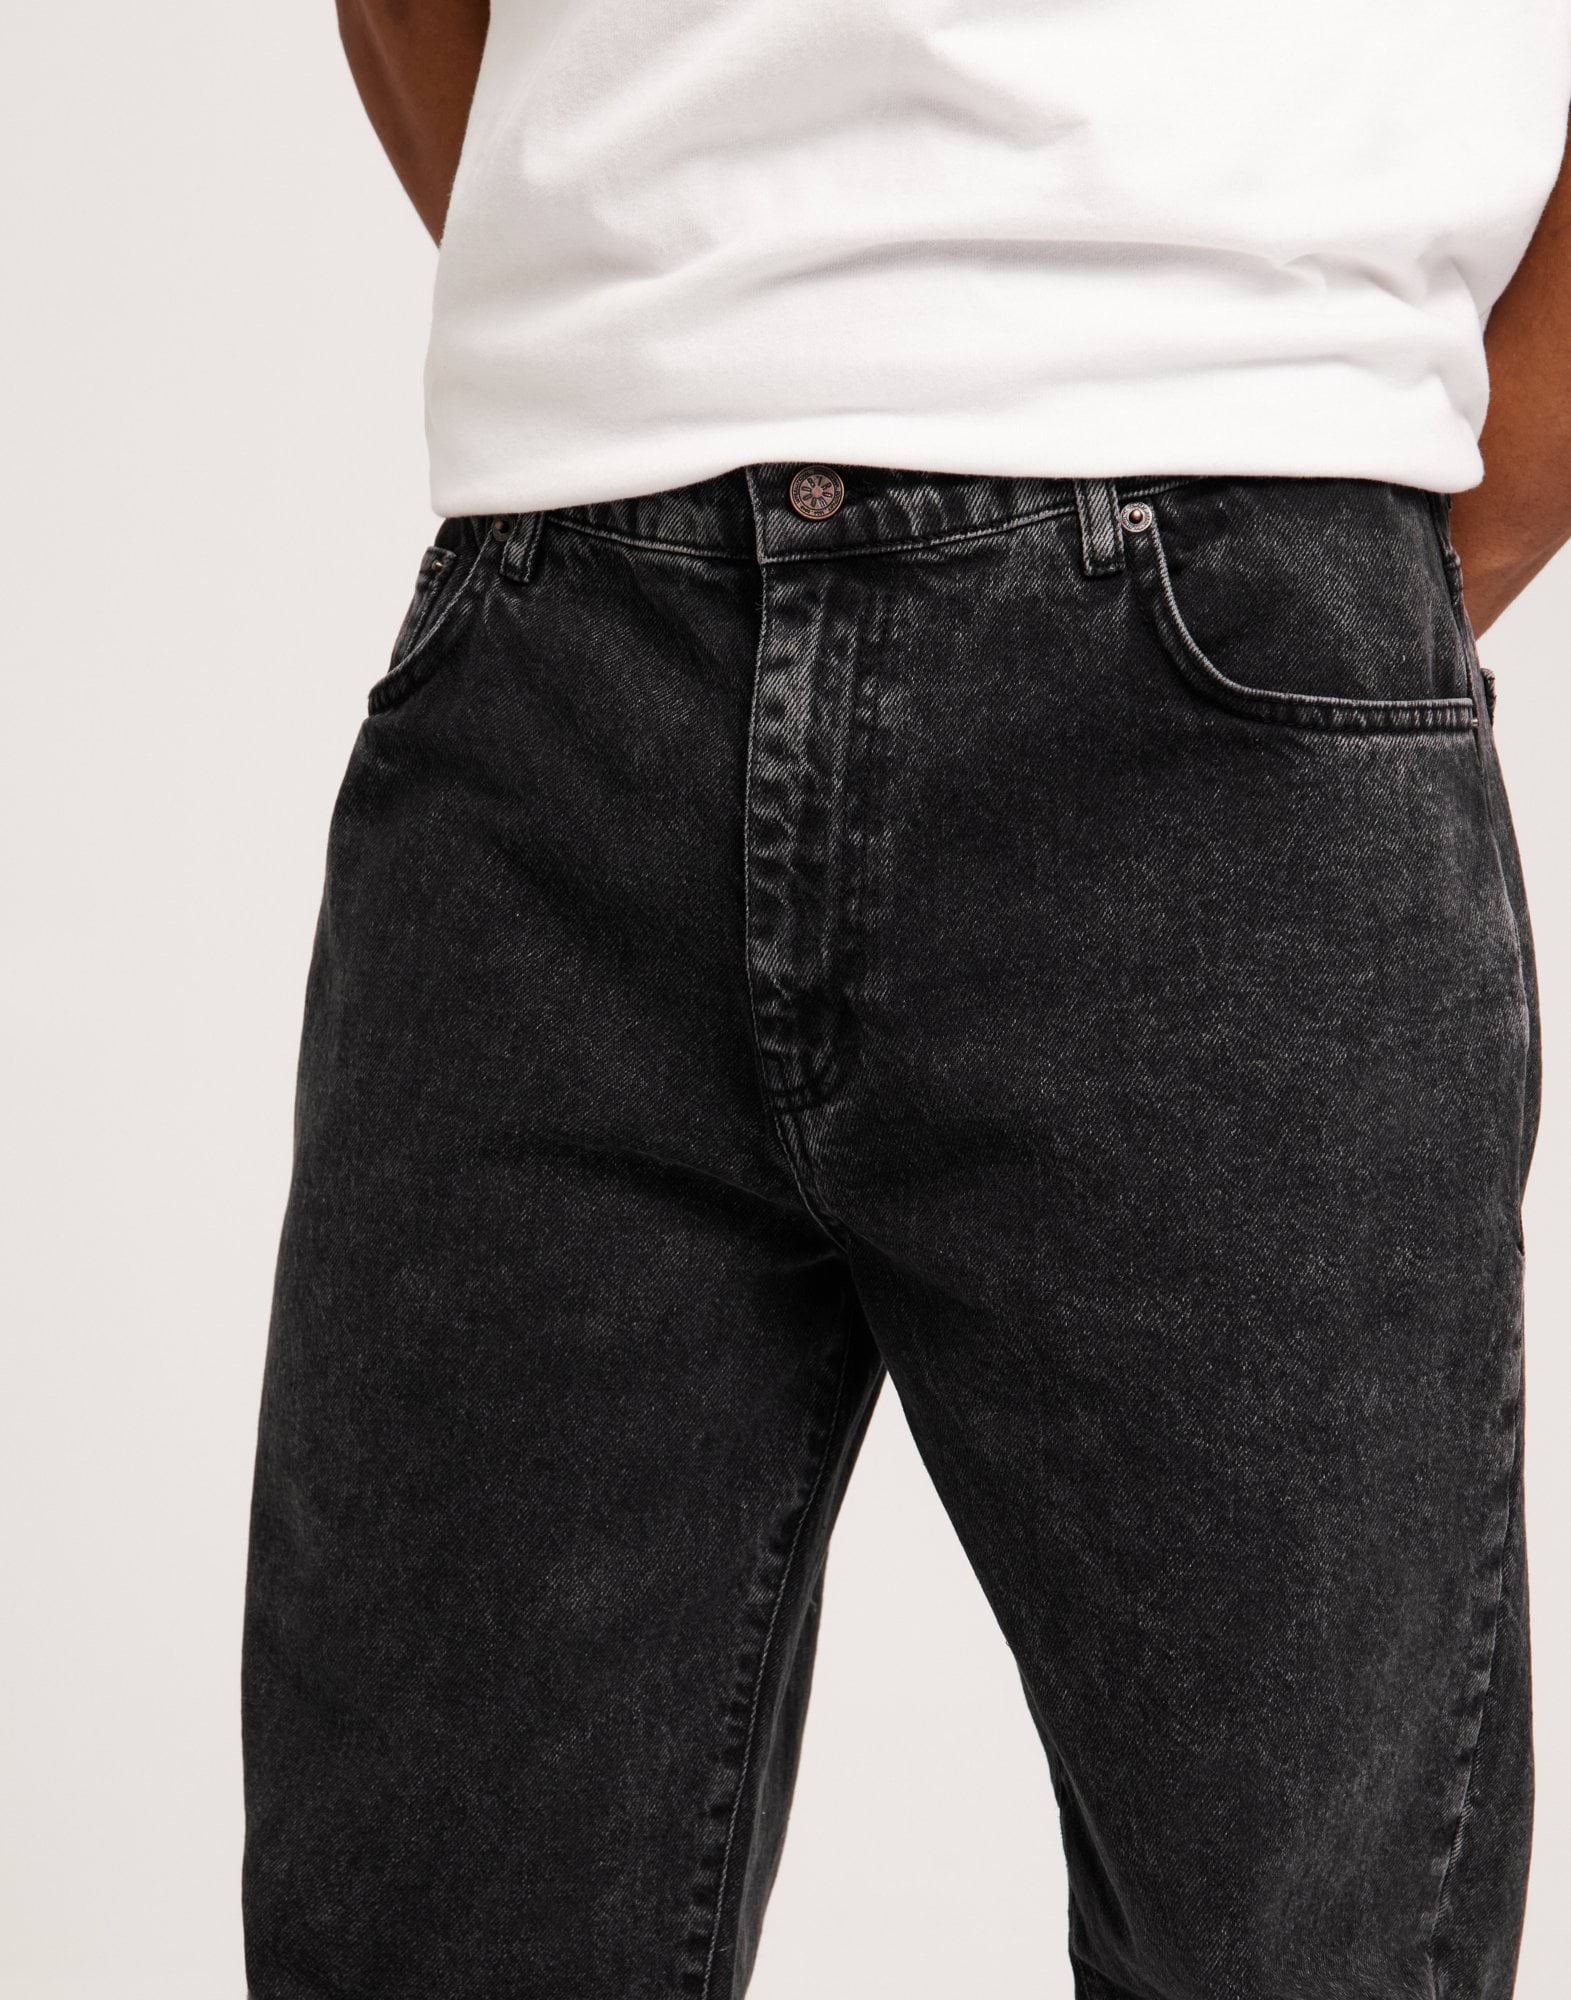 Leroy Thun Black Jeans